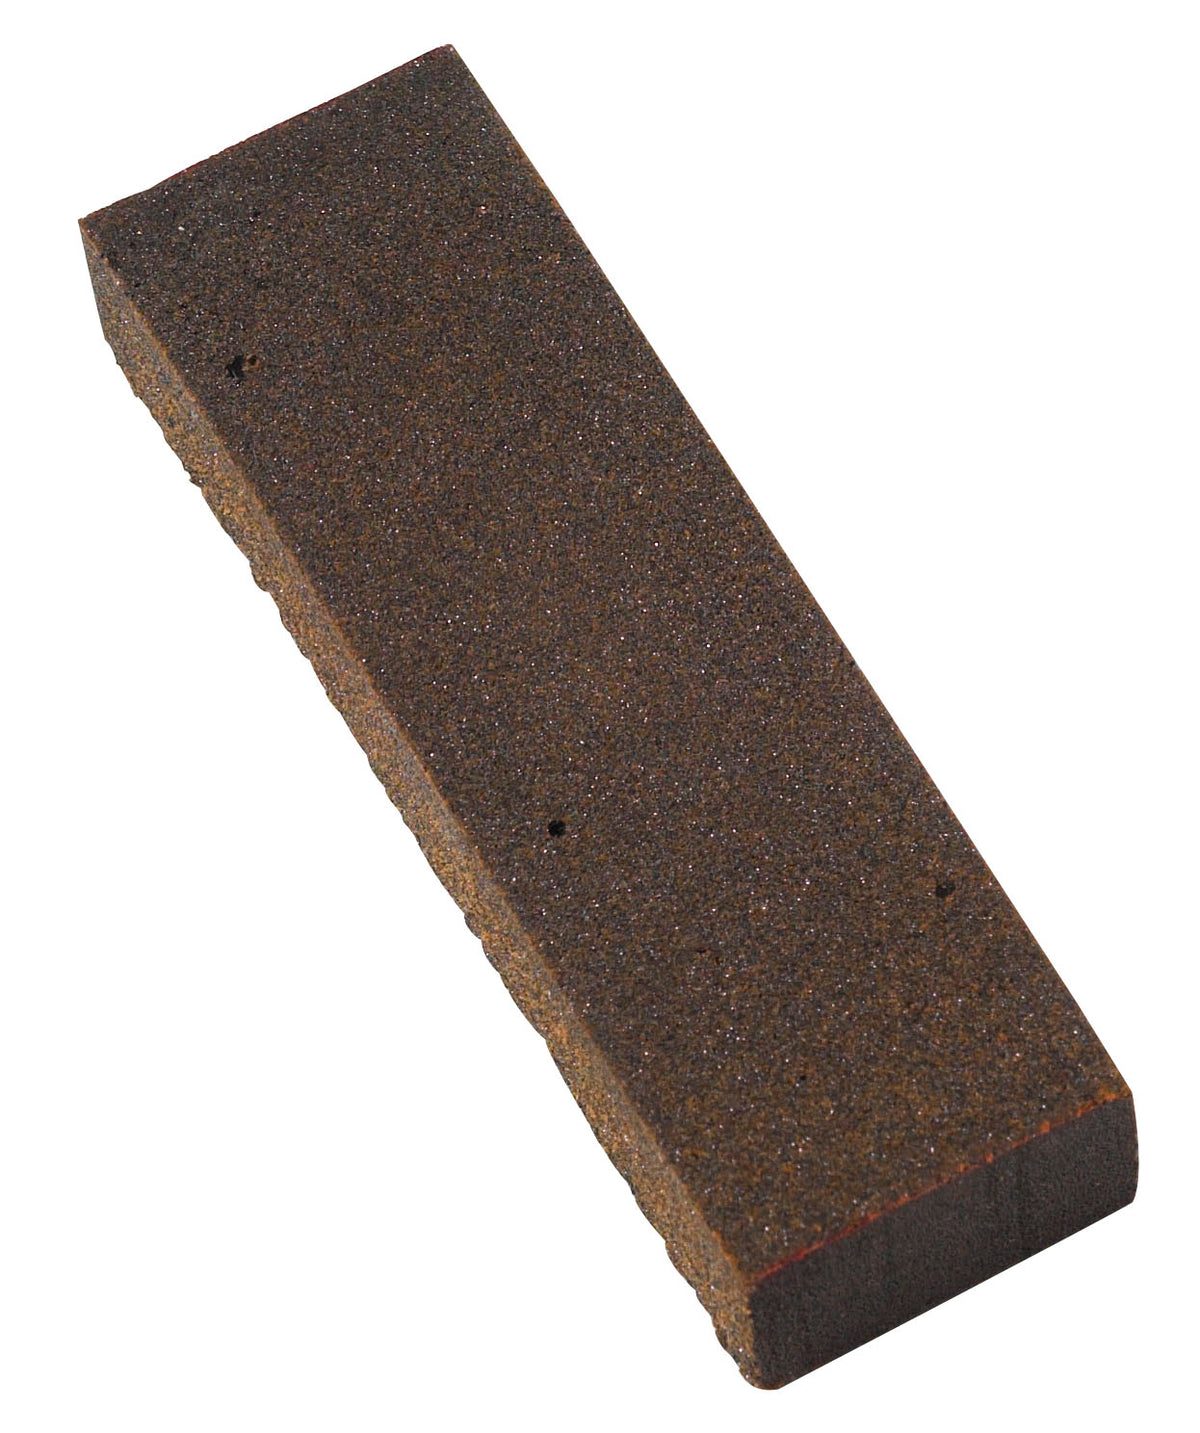 Multi Purpose Rust Eraser - Single Eraser - Smoky Mountain Knife Works